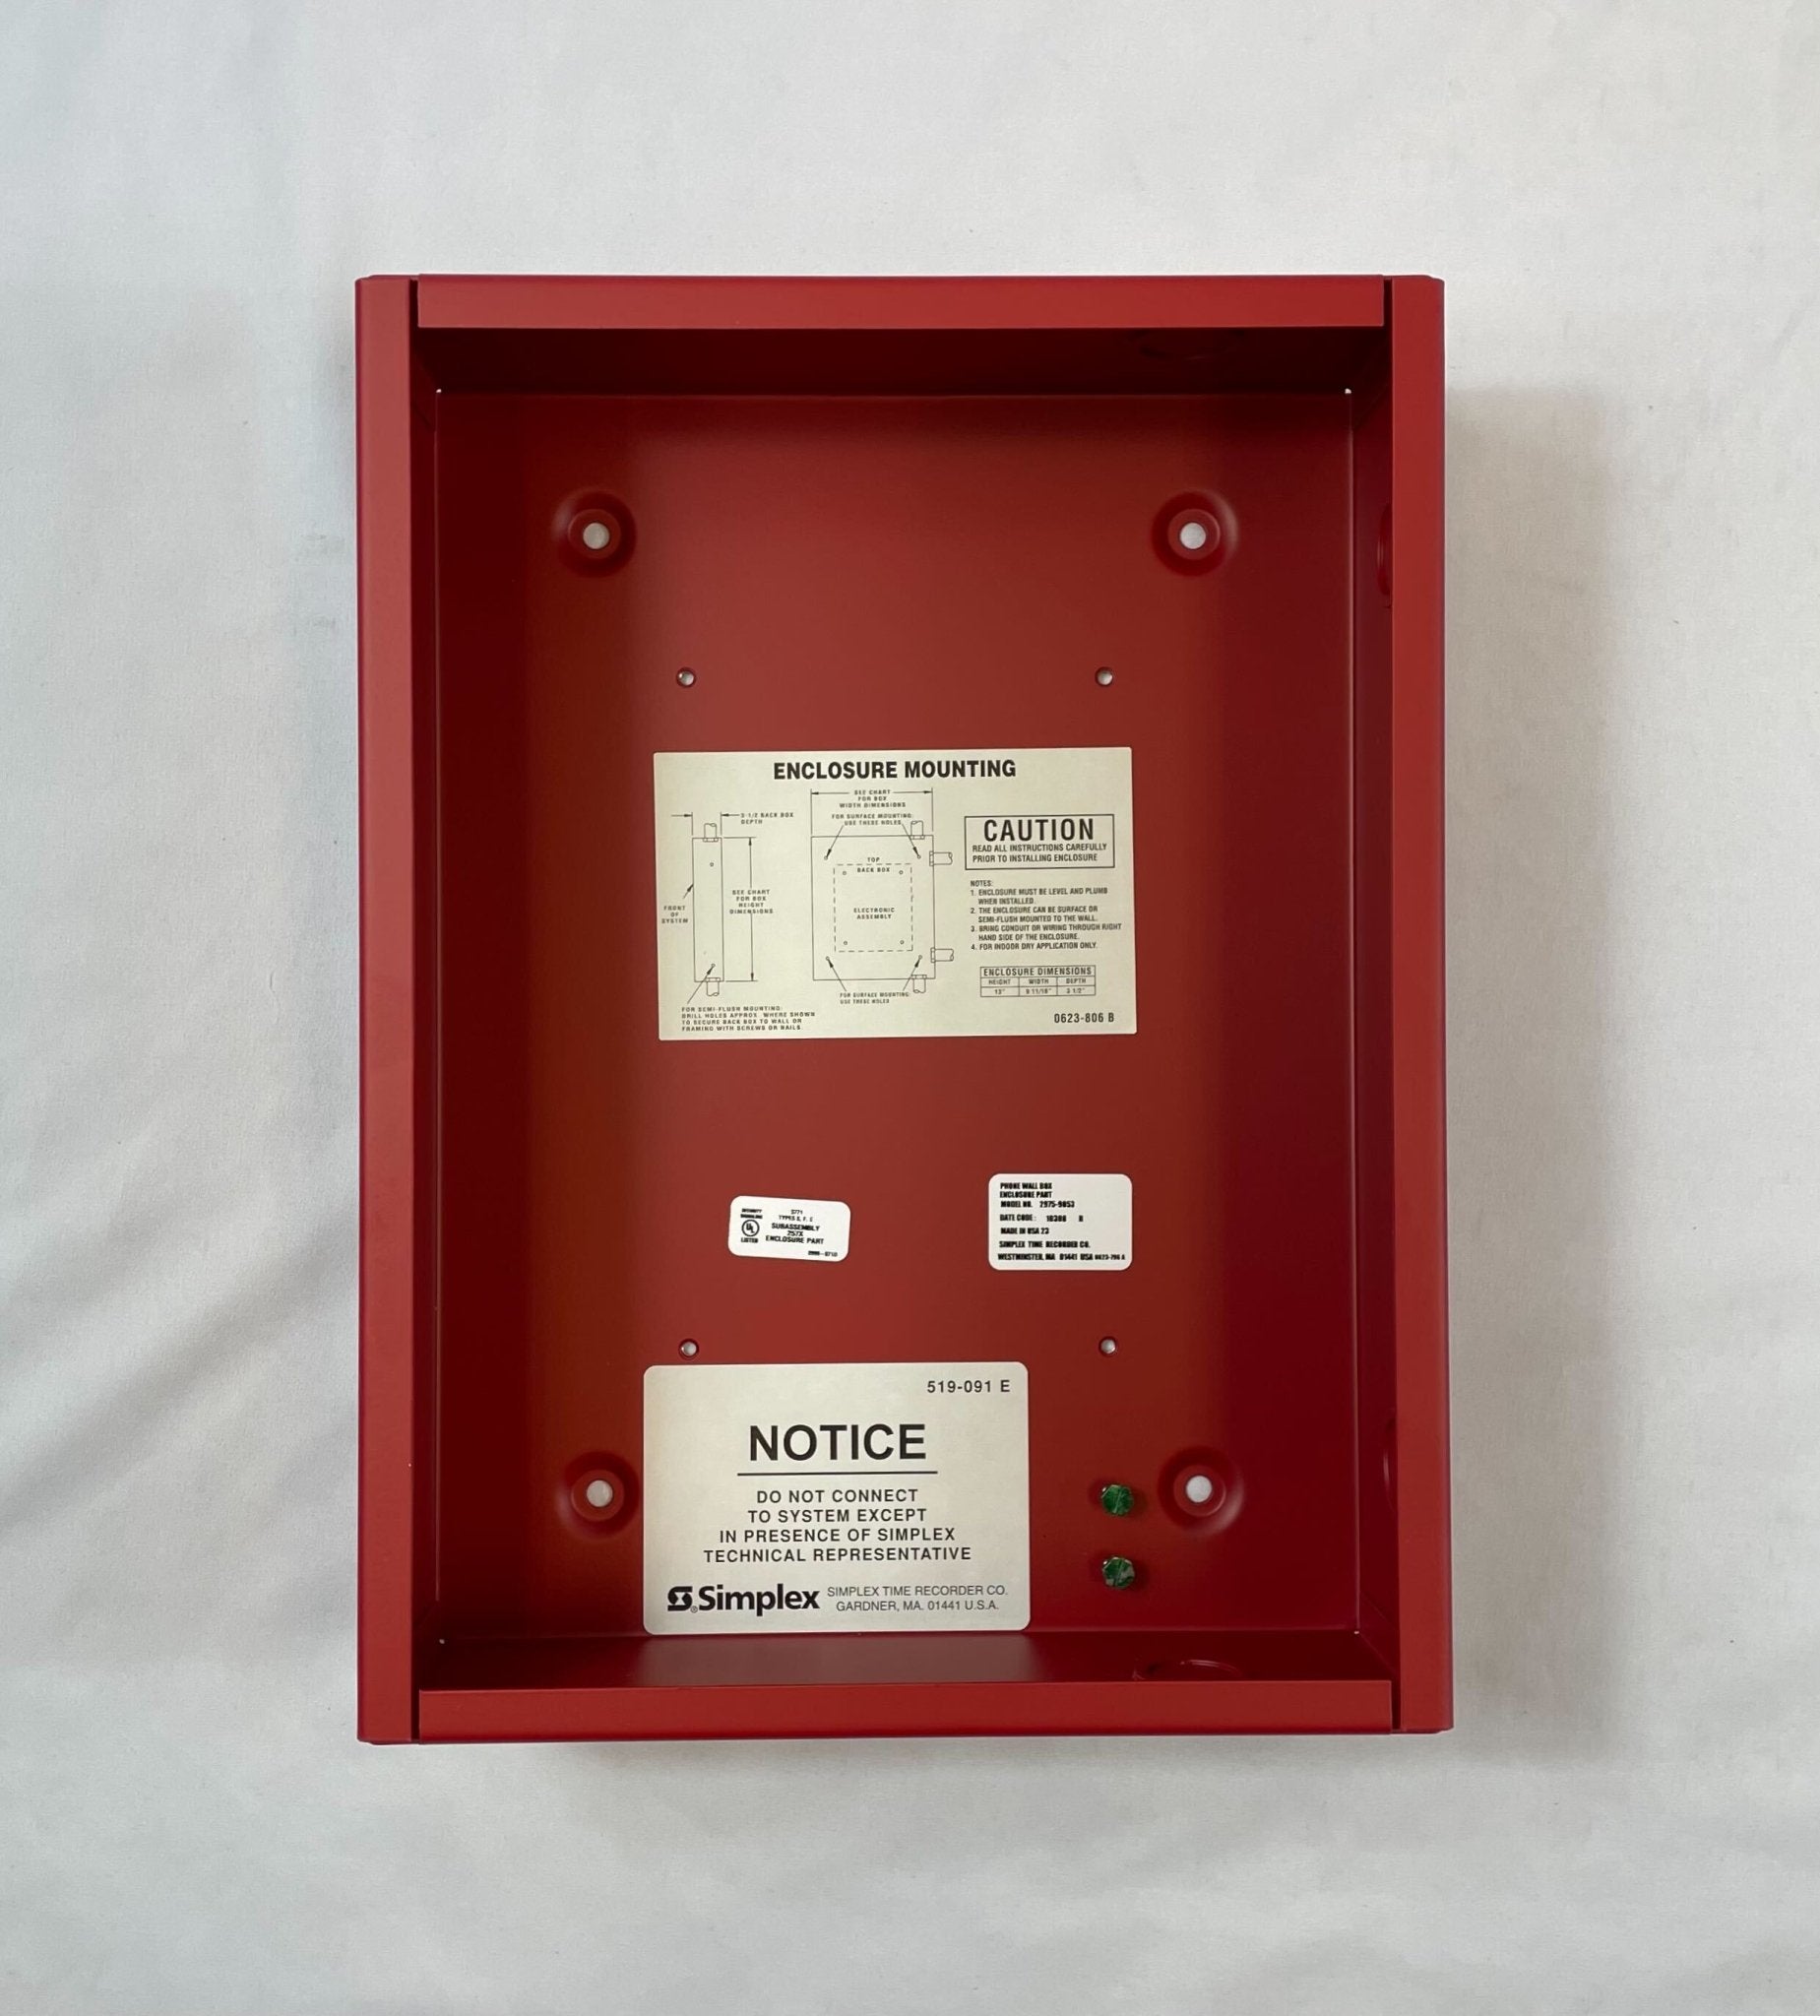 Simplex 2975-9053 - The Fire Alarm Supplier